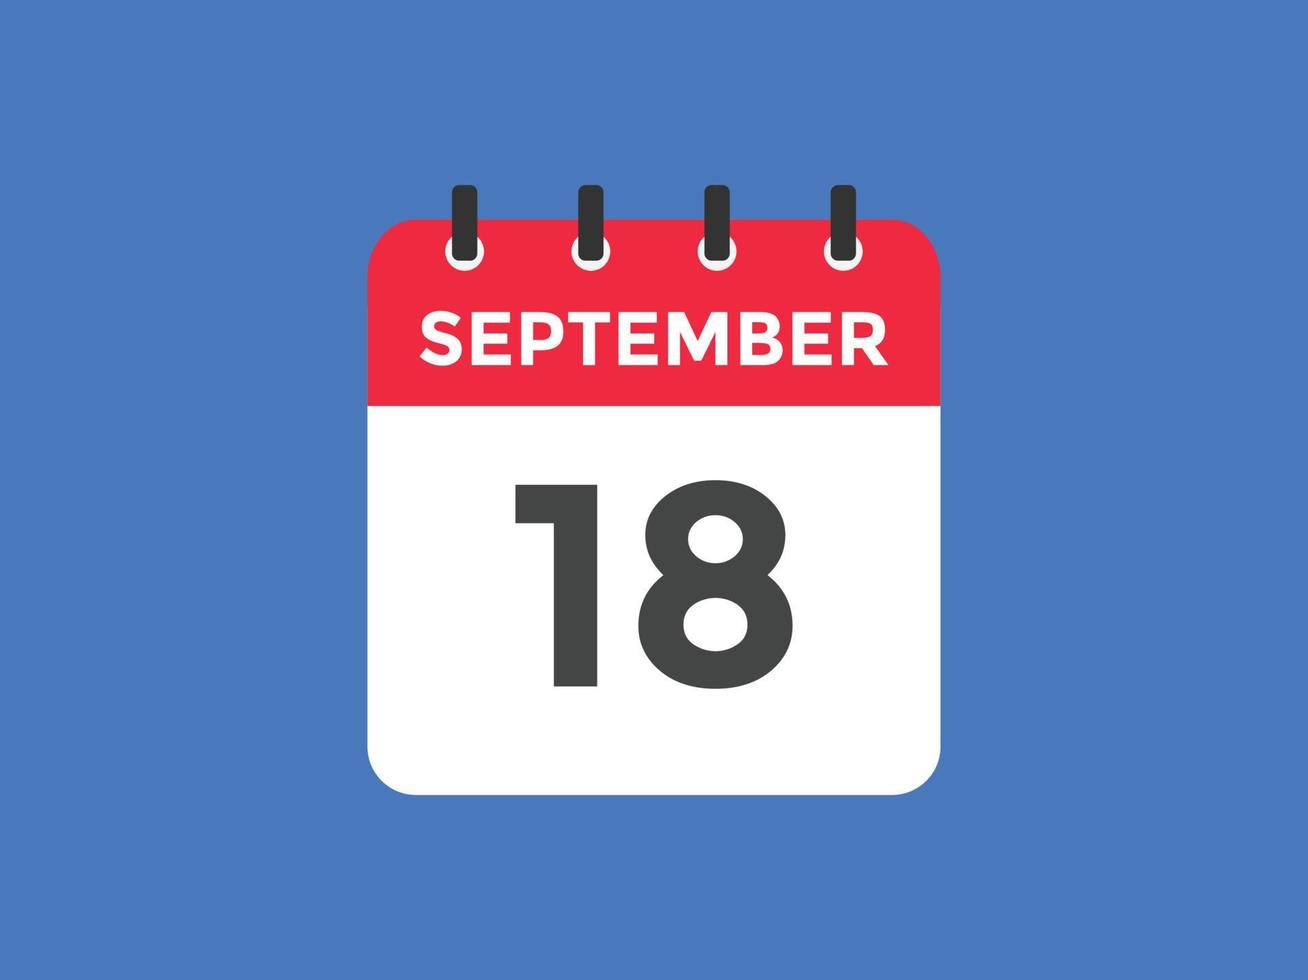 september 18 calendar reminder. 18th september daily calendar icon template. Calendar 18th september icon Design template. Vector illustration